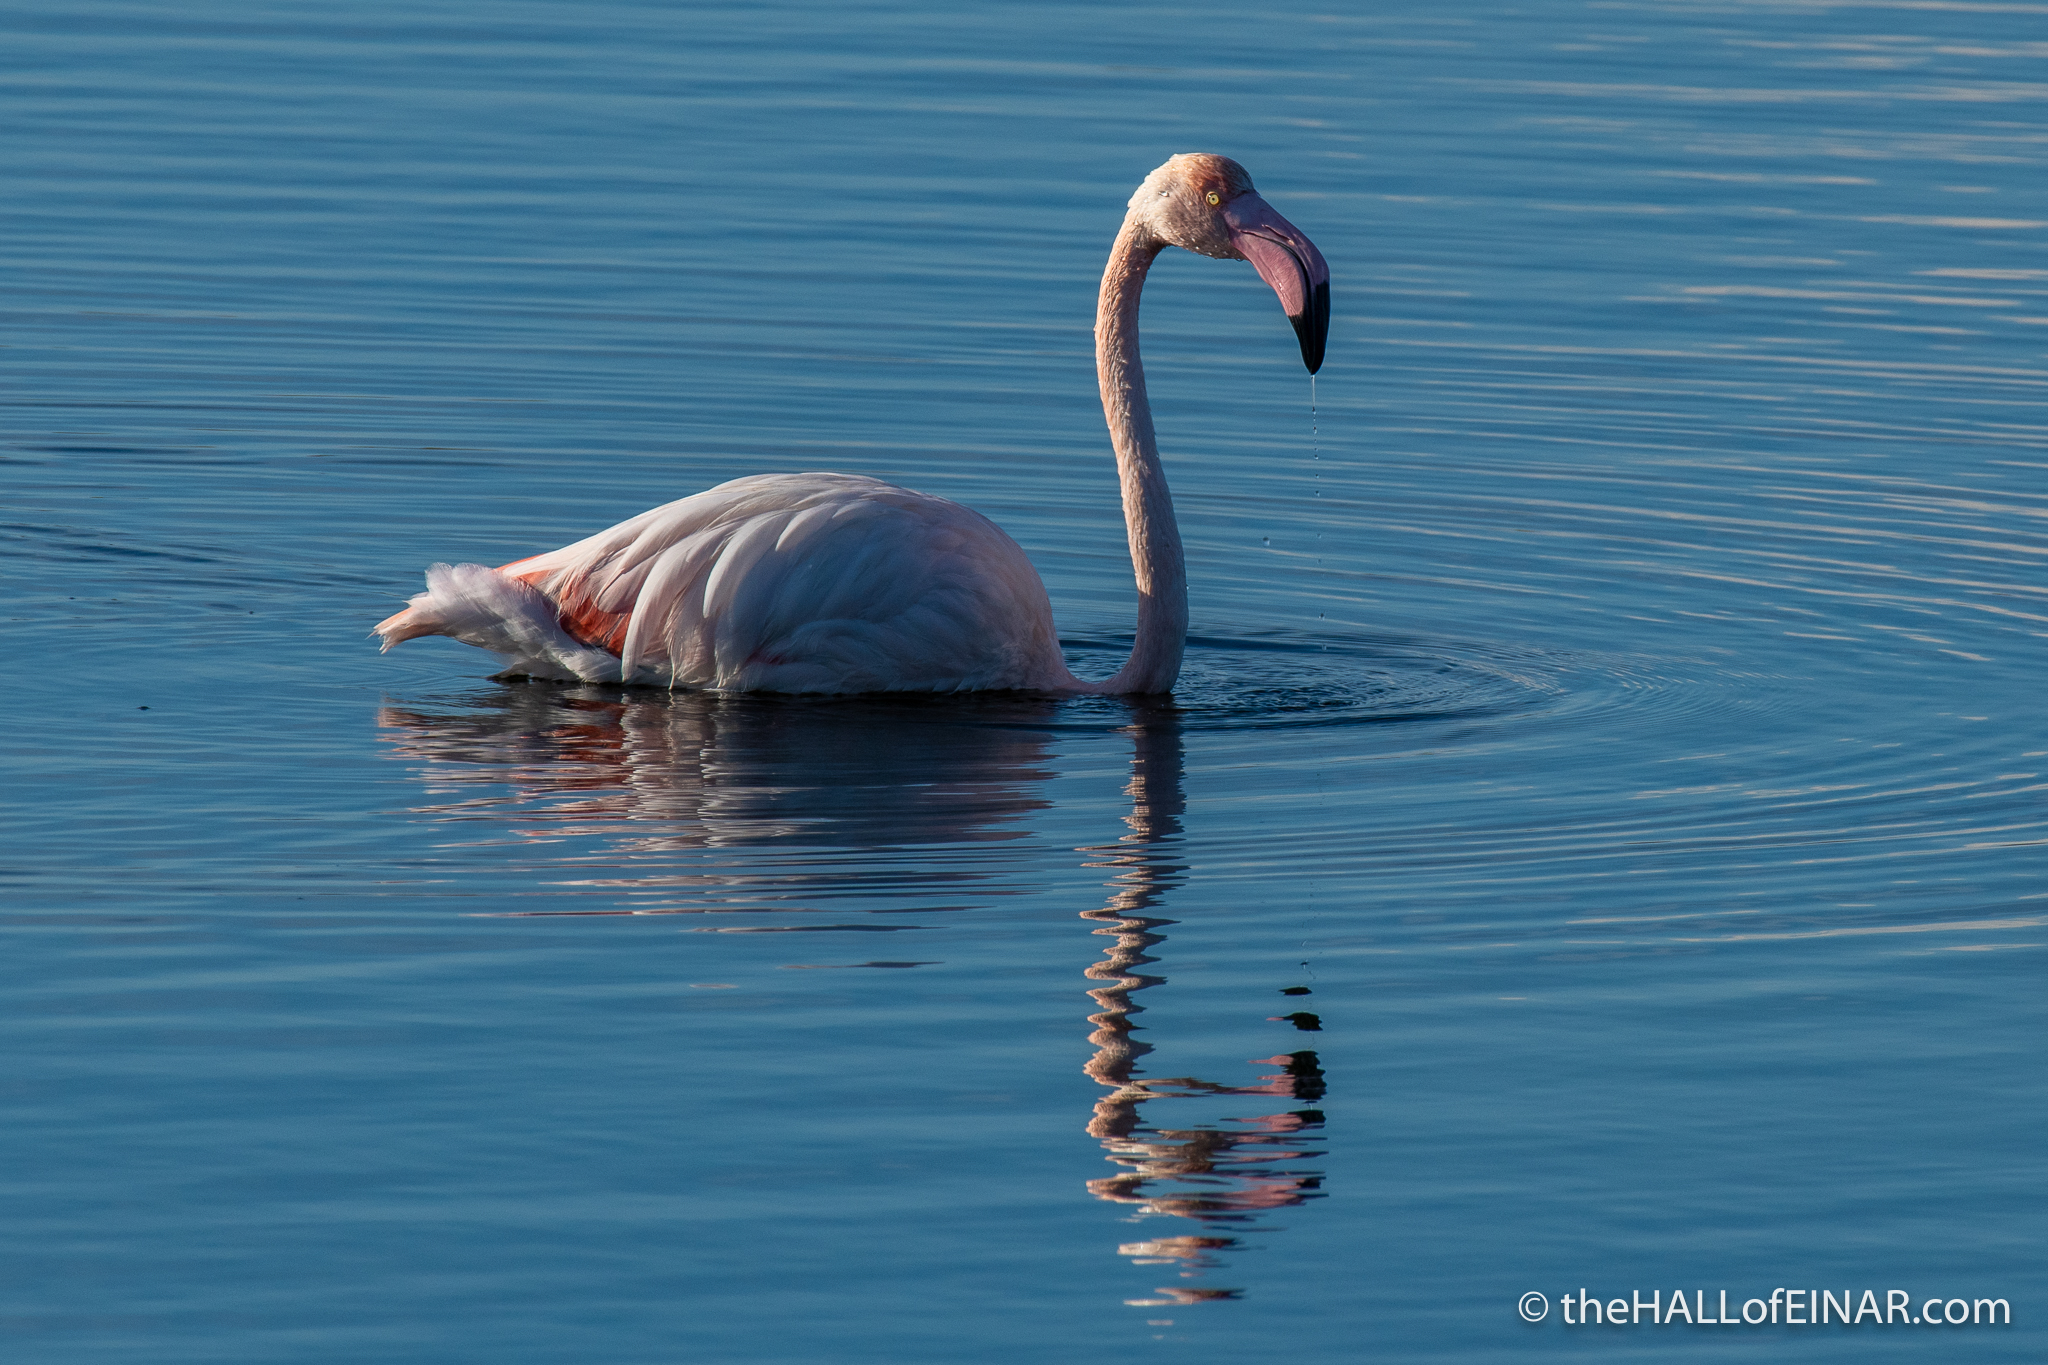 Flamingo - Orbetello - The Hall of Einar - photograph (c) David Bailey (not the)